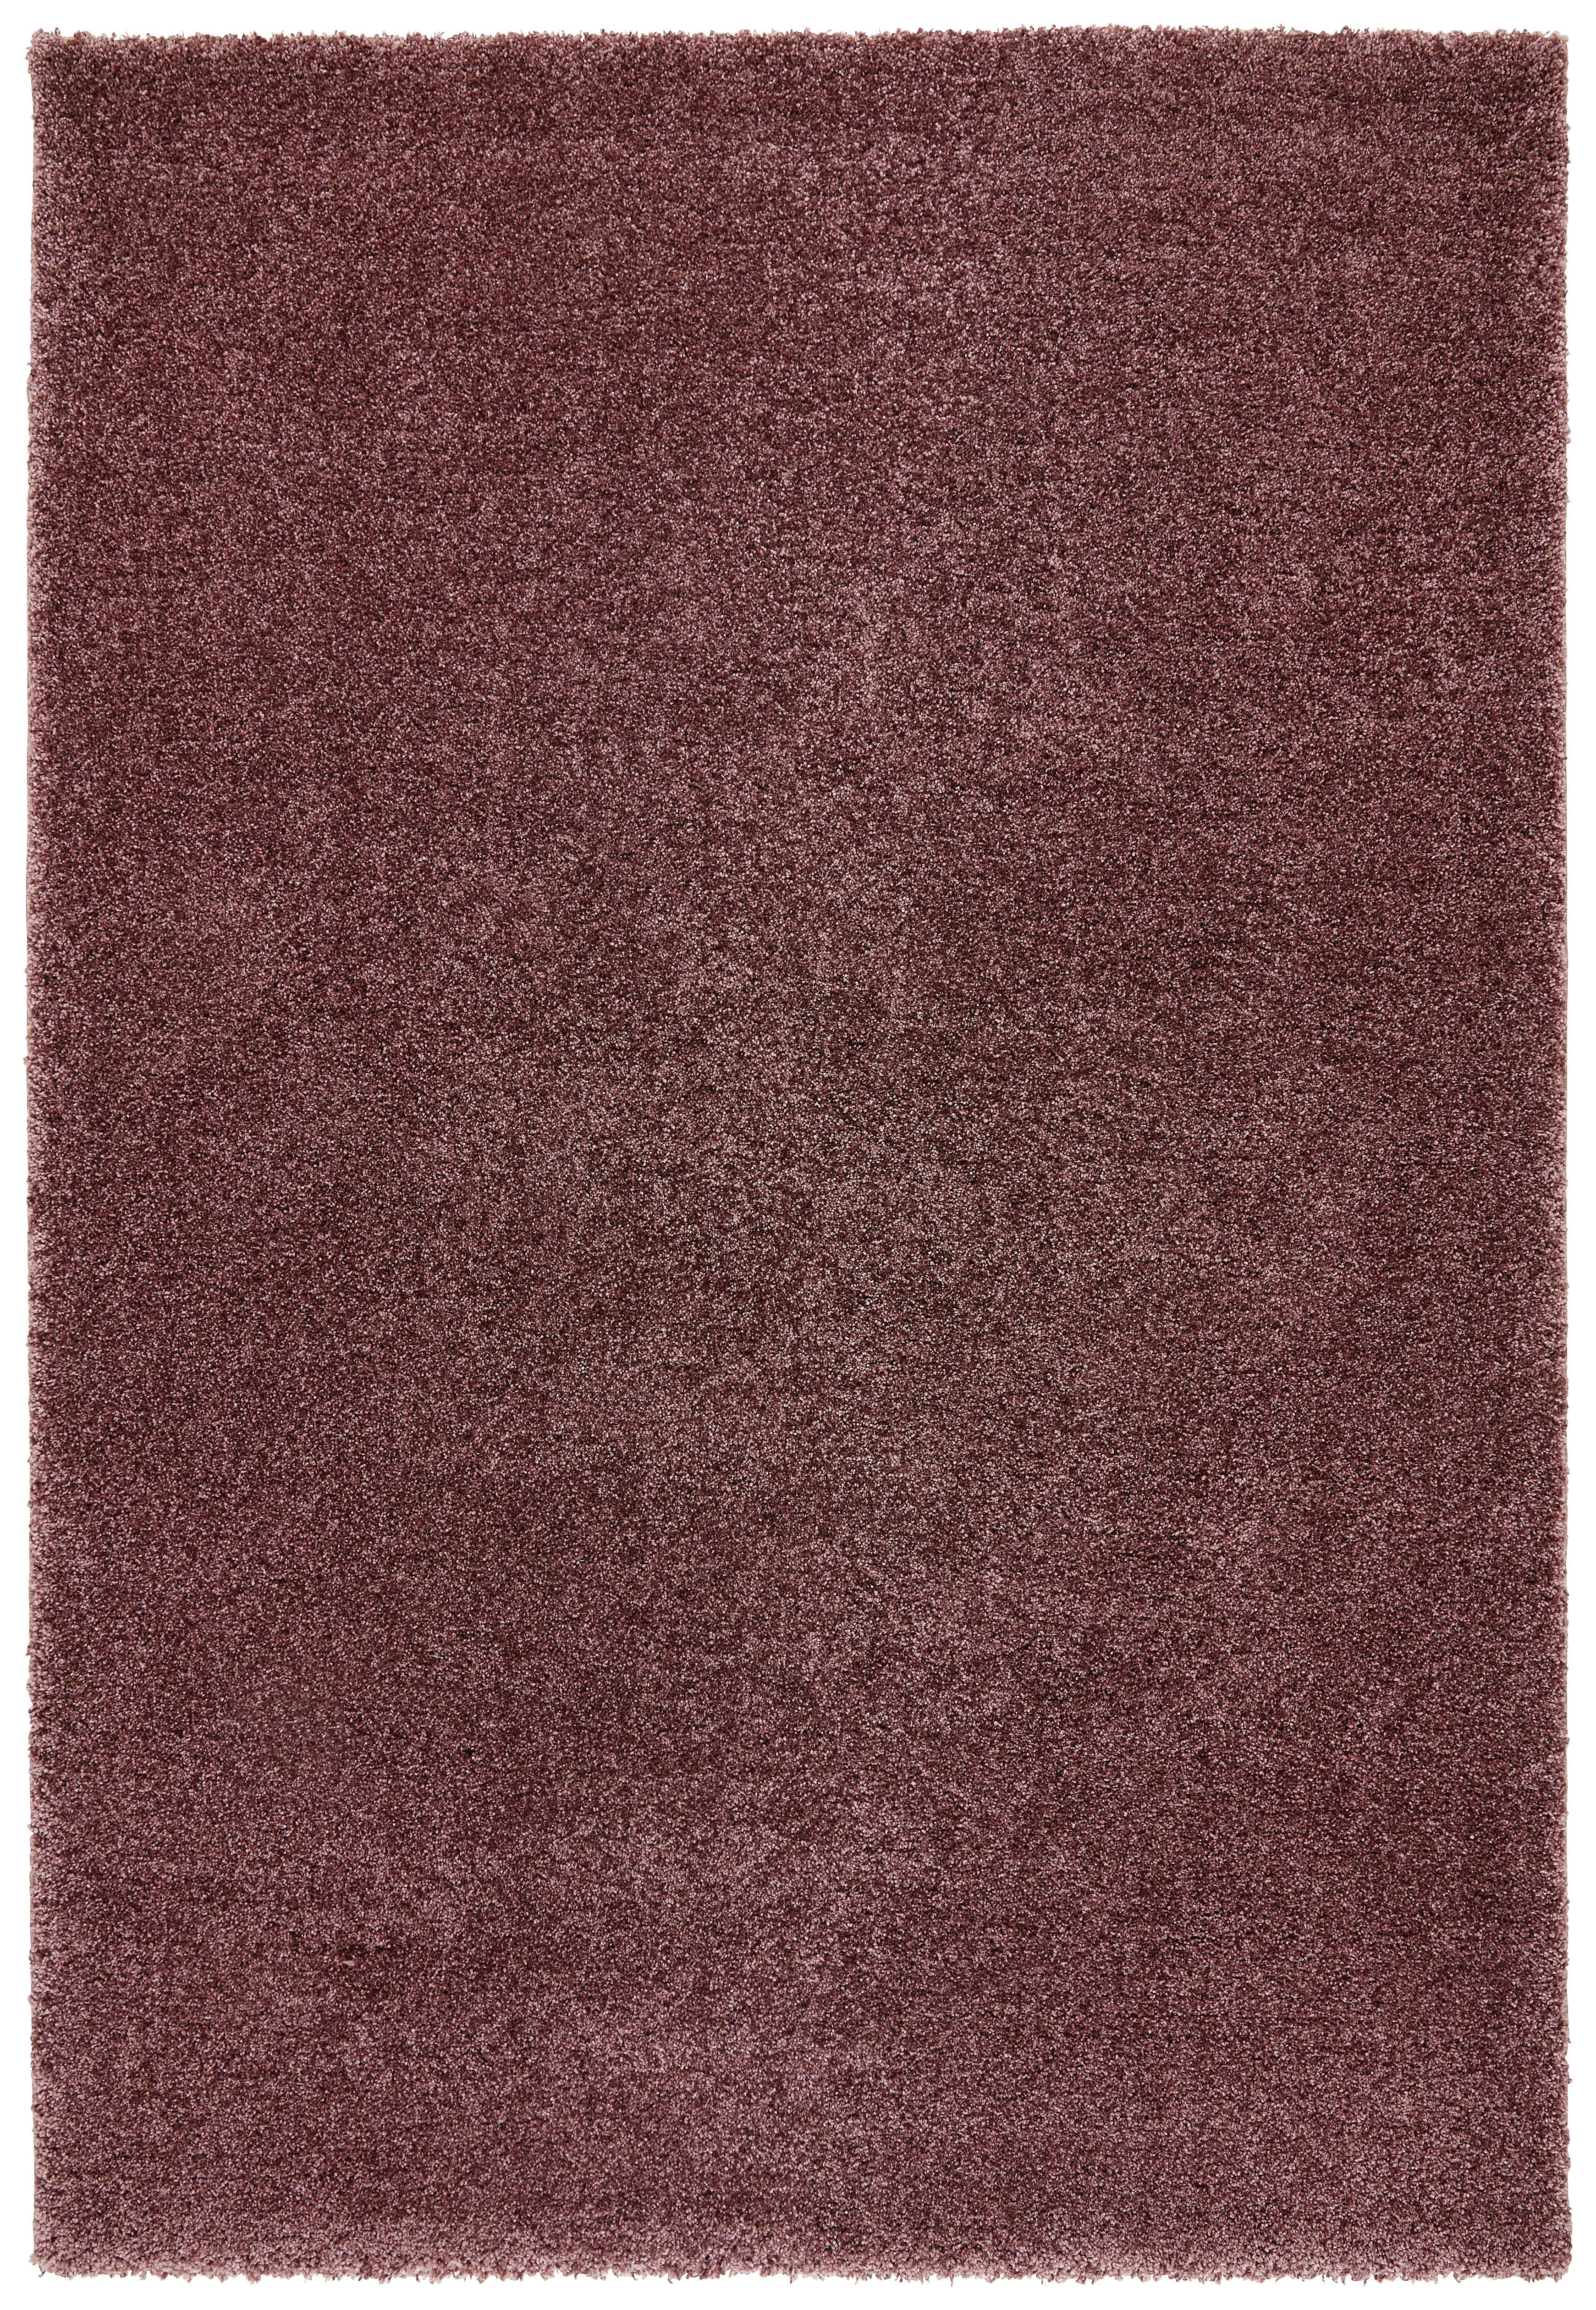 Webteppich Rubin ca. 120x170cm - Aubergine, ROMANTIK / LANDHAUS, Kunststoff (120/170cm) - Modern Living